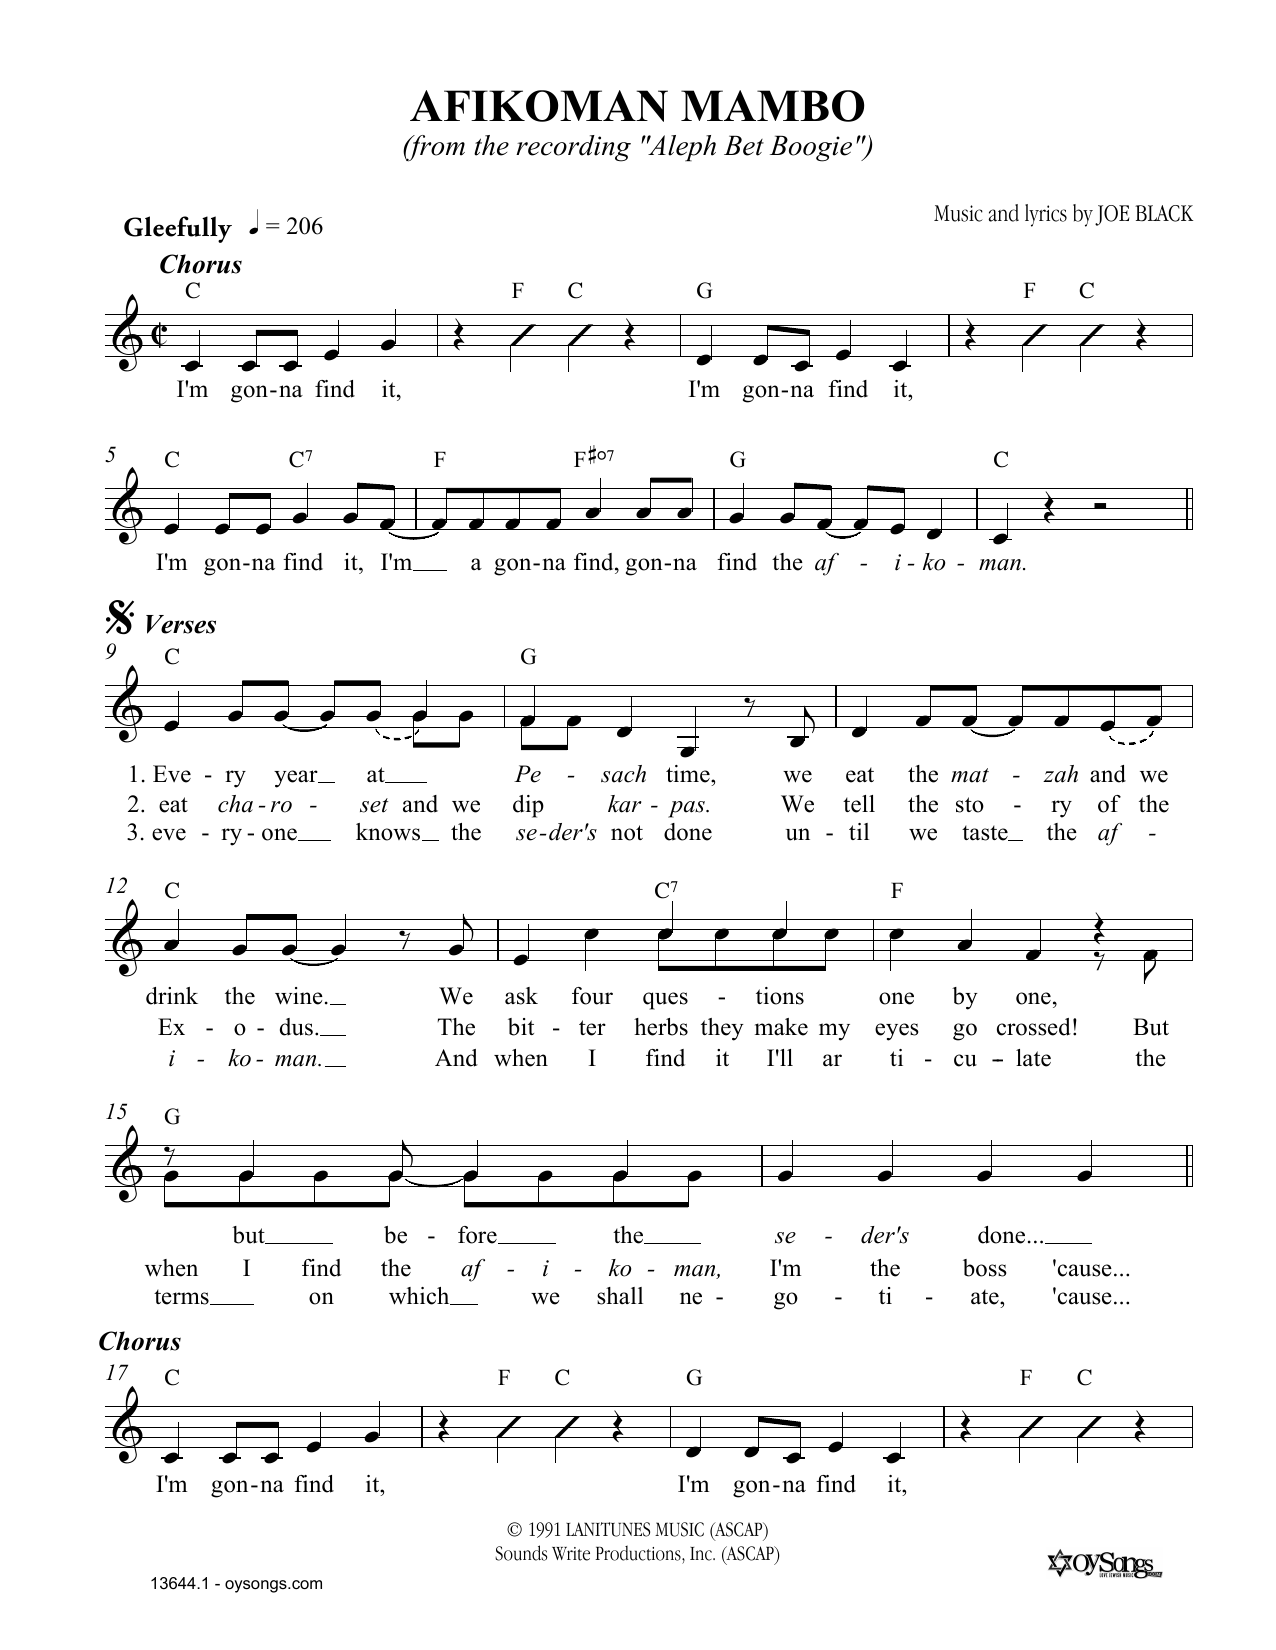 Download Joe Black Afikoman Mambo Sheet Music and learn how to play Melody Line, Lyrics & Chords PDF digital score in minutes